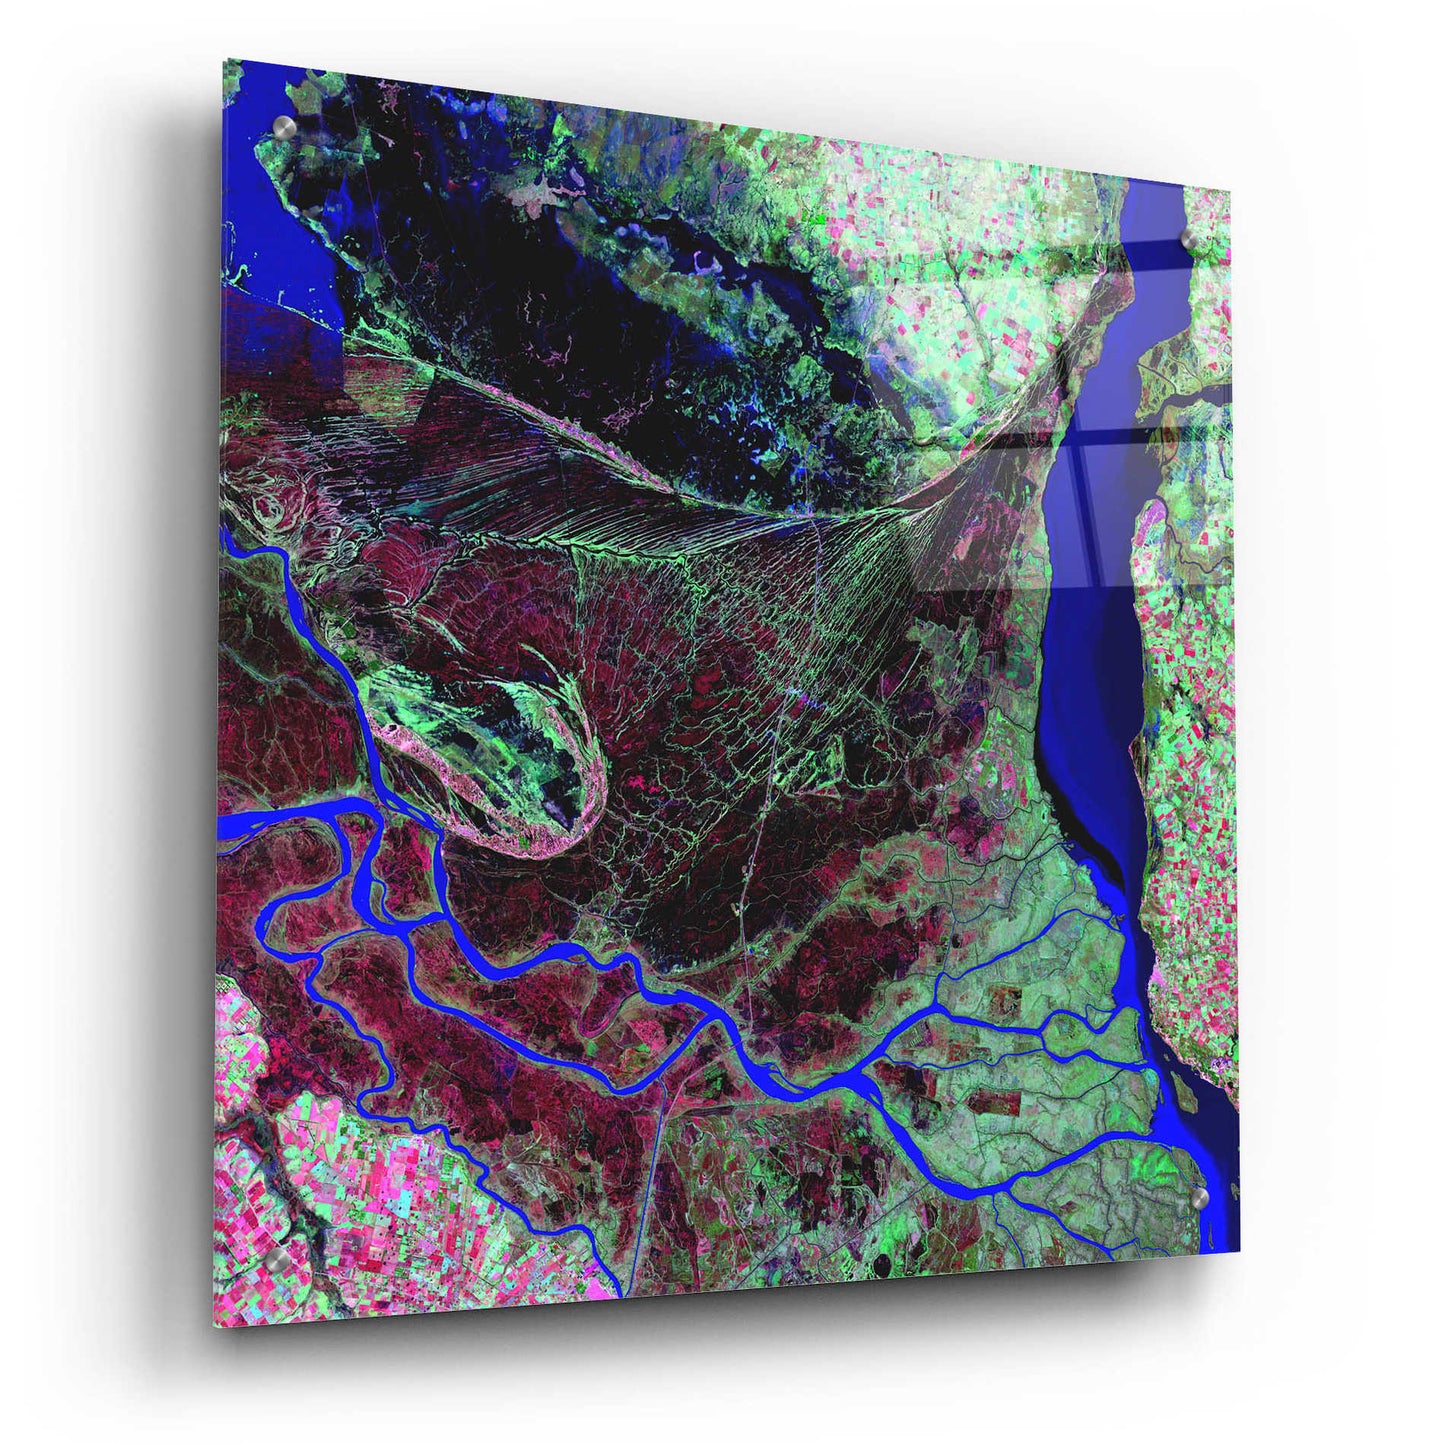 Epic Art 'Earth as Art: Parana River Delta' Acrylic Glass Wall Art,24x24